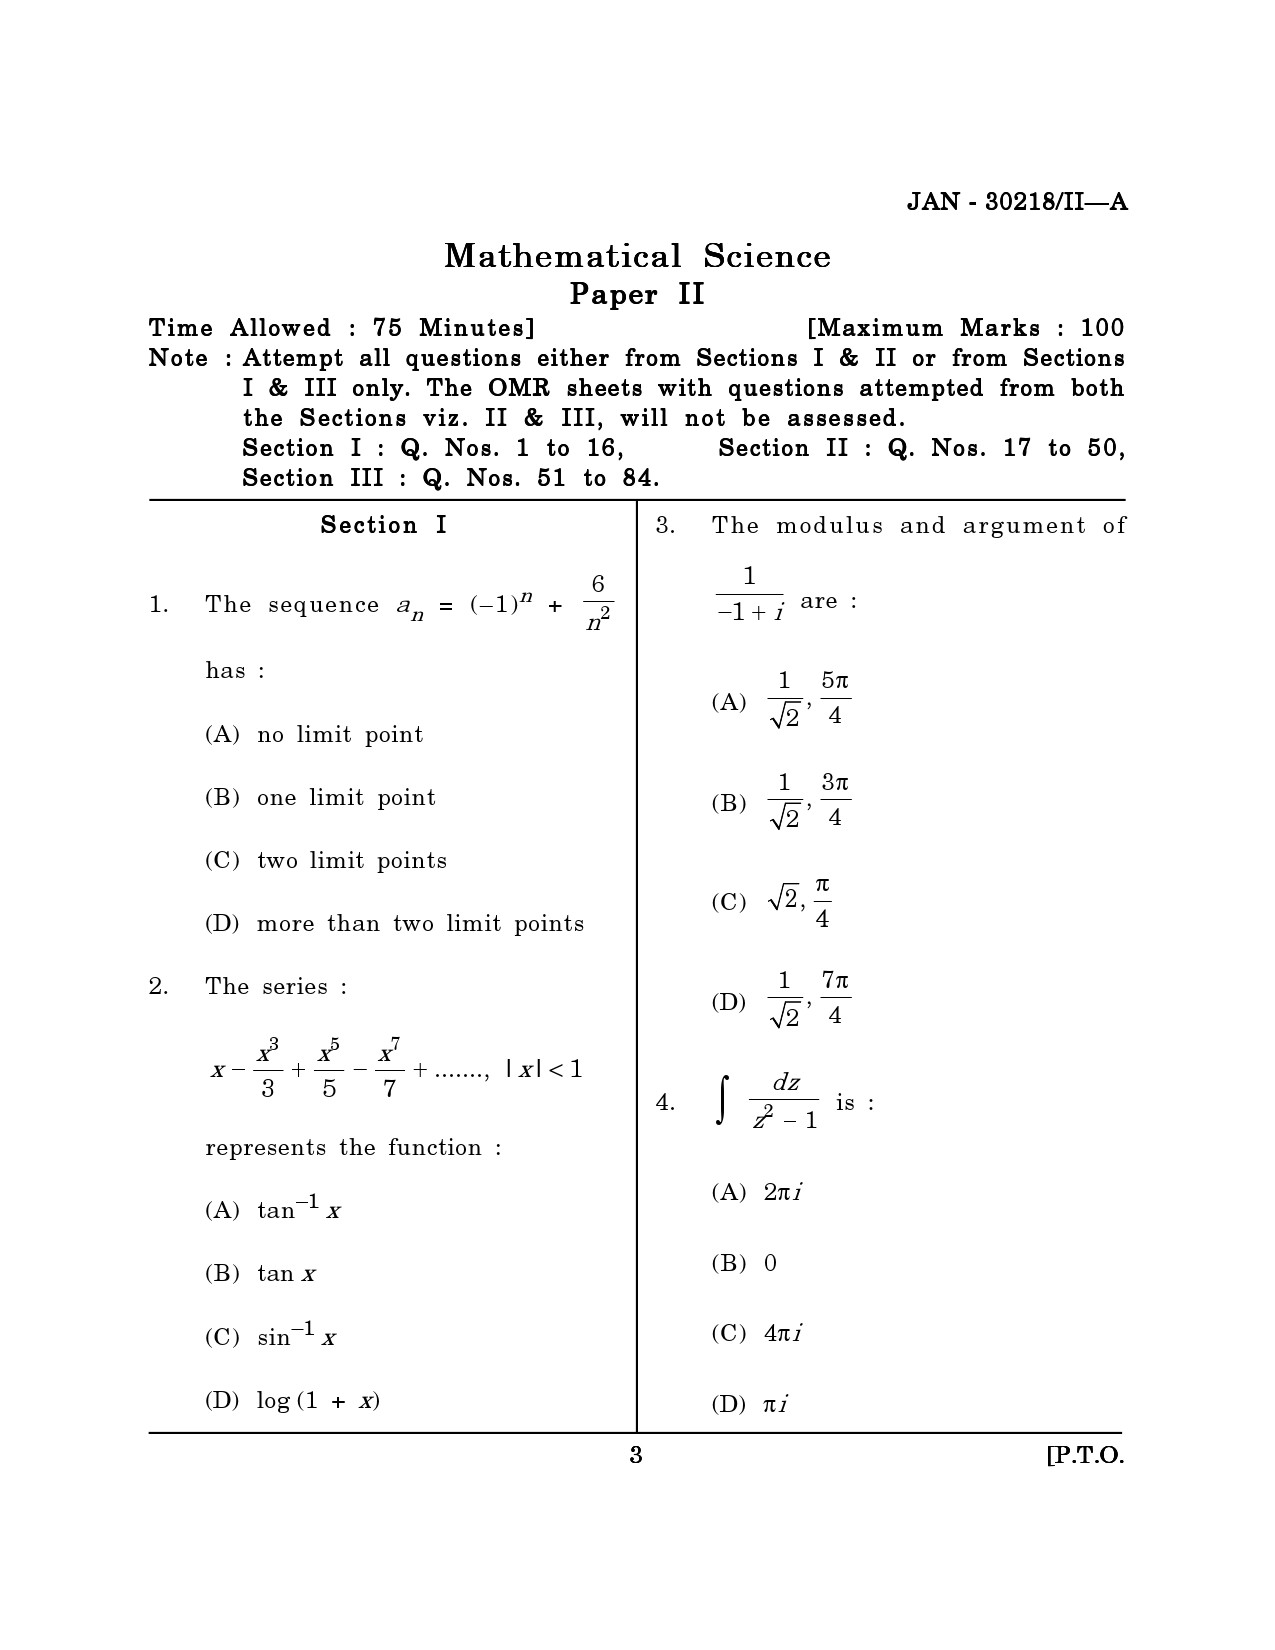 Maharashtra SET Mathematical Sciences Question Paper II January 2018 2